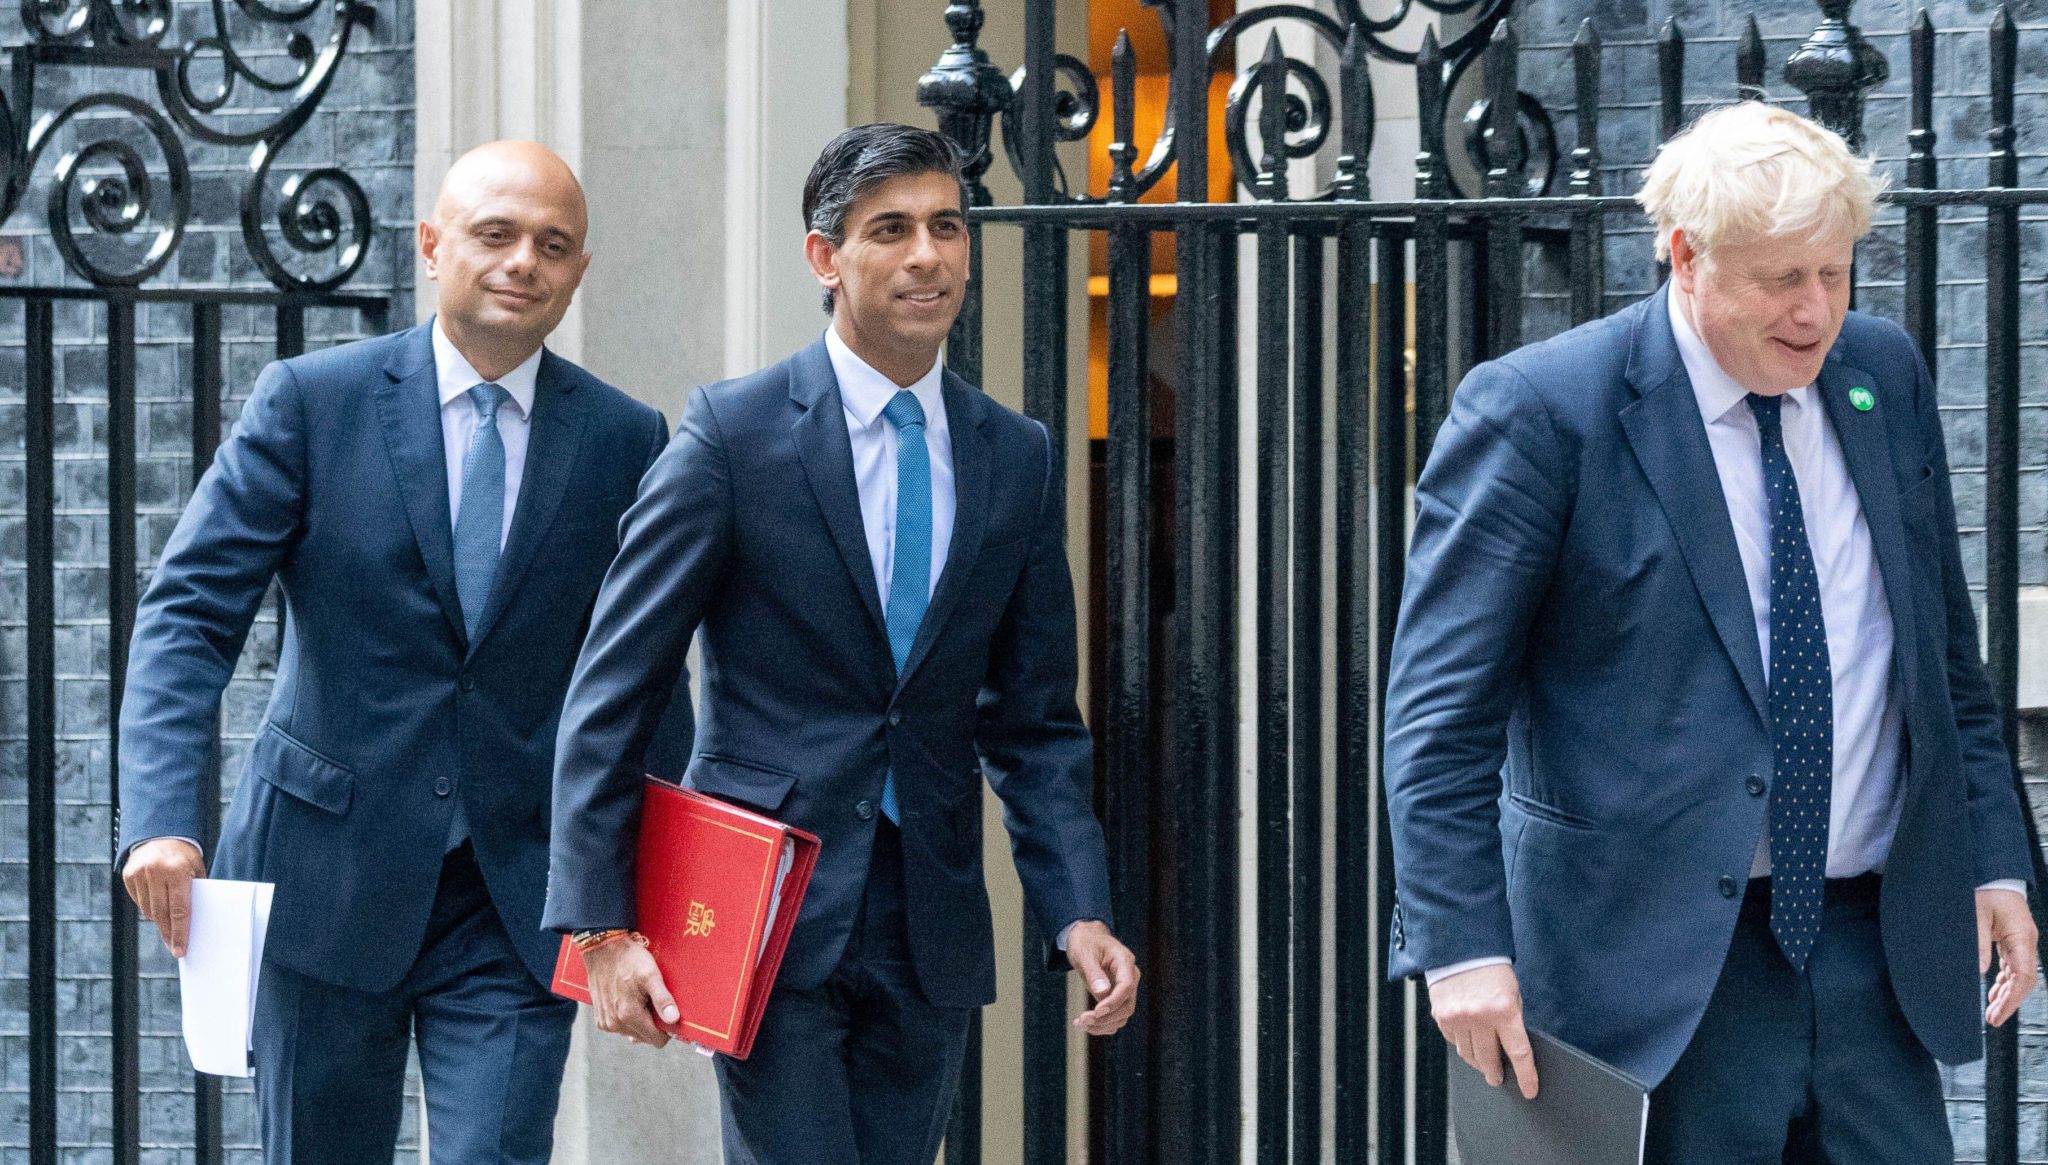 UK Prime Minister Boris Johnson walks away from 10 Downing Street with his Chancellor Rishi Sunak and Health Secretary Sajid Javid in September 2021. Image: Ian Davidson/Alamy Live News